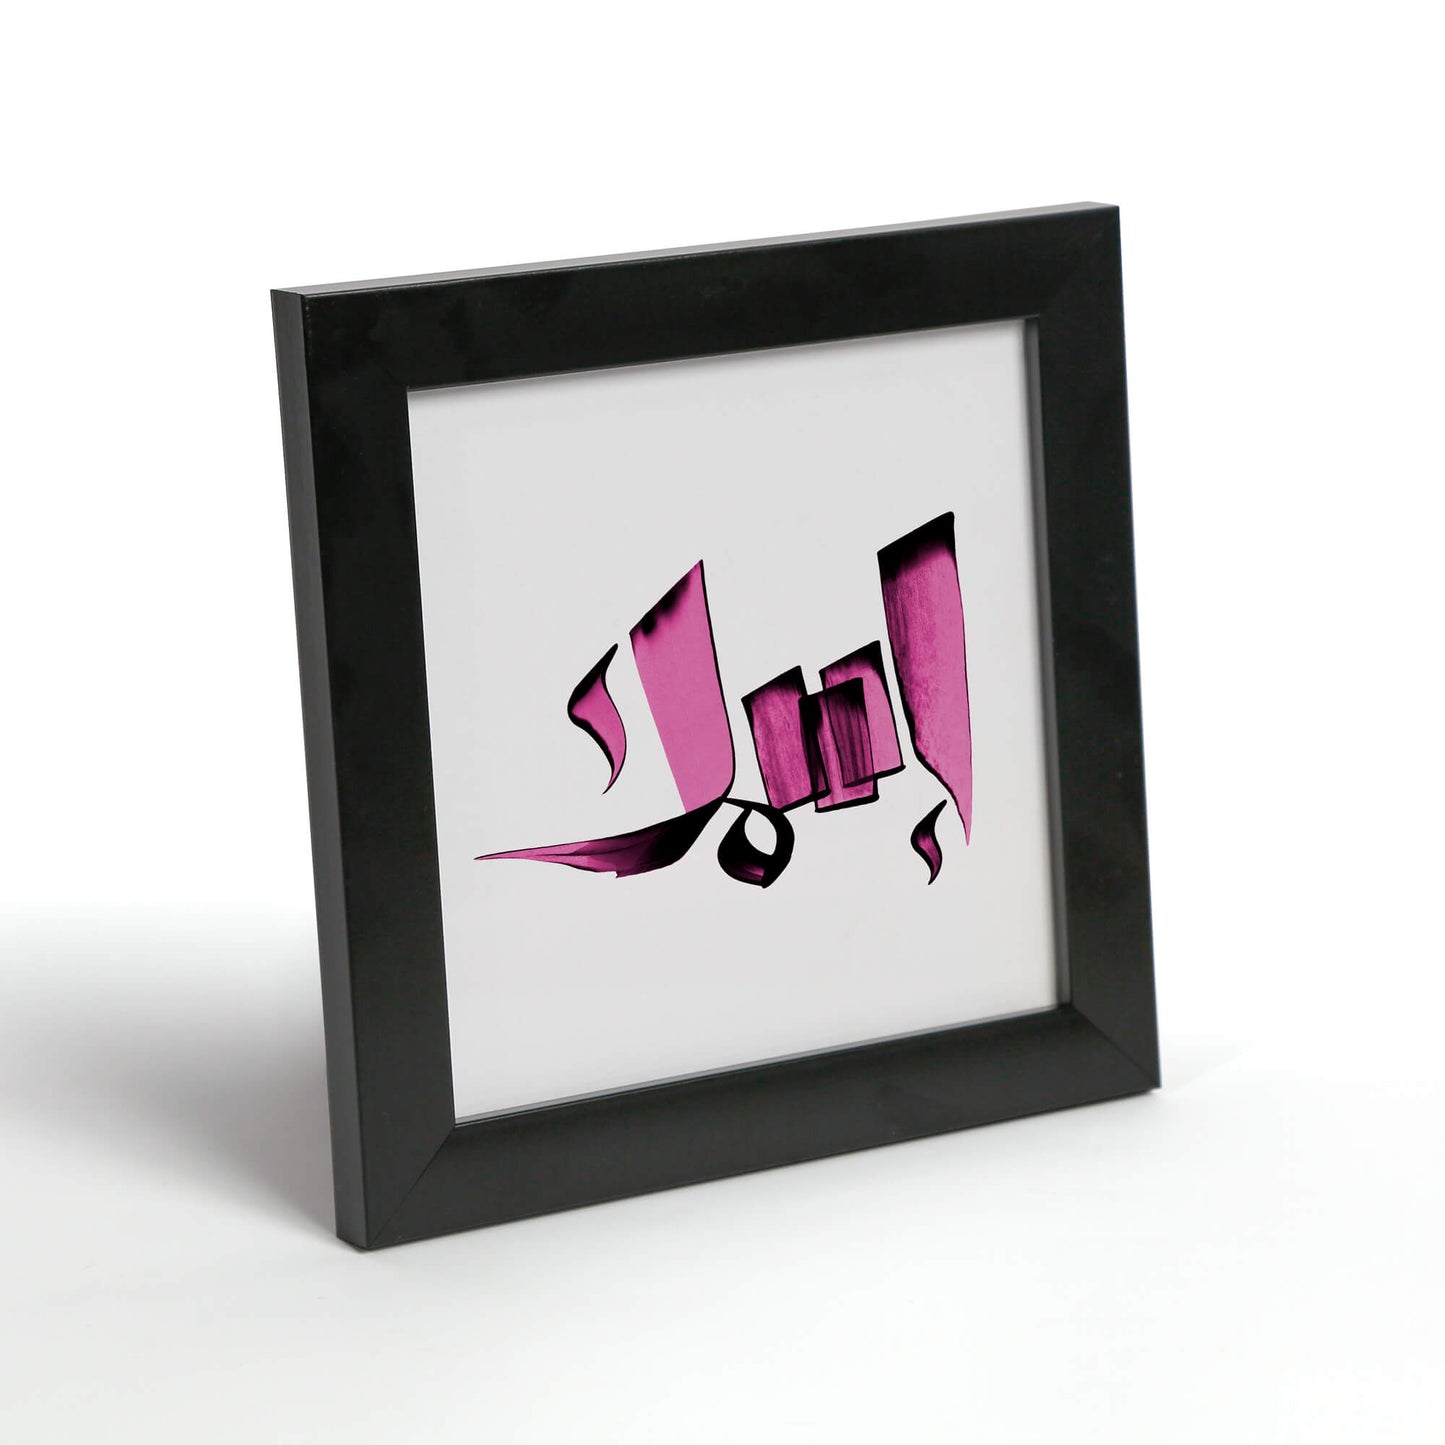 Arabic Frame